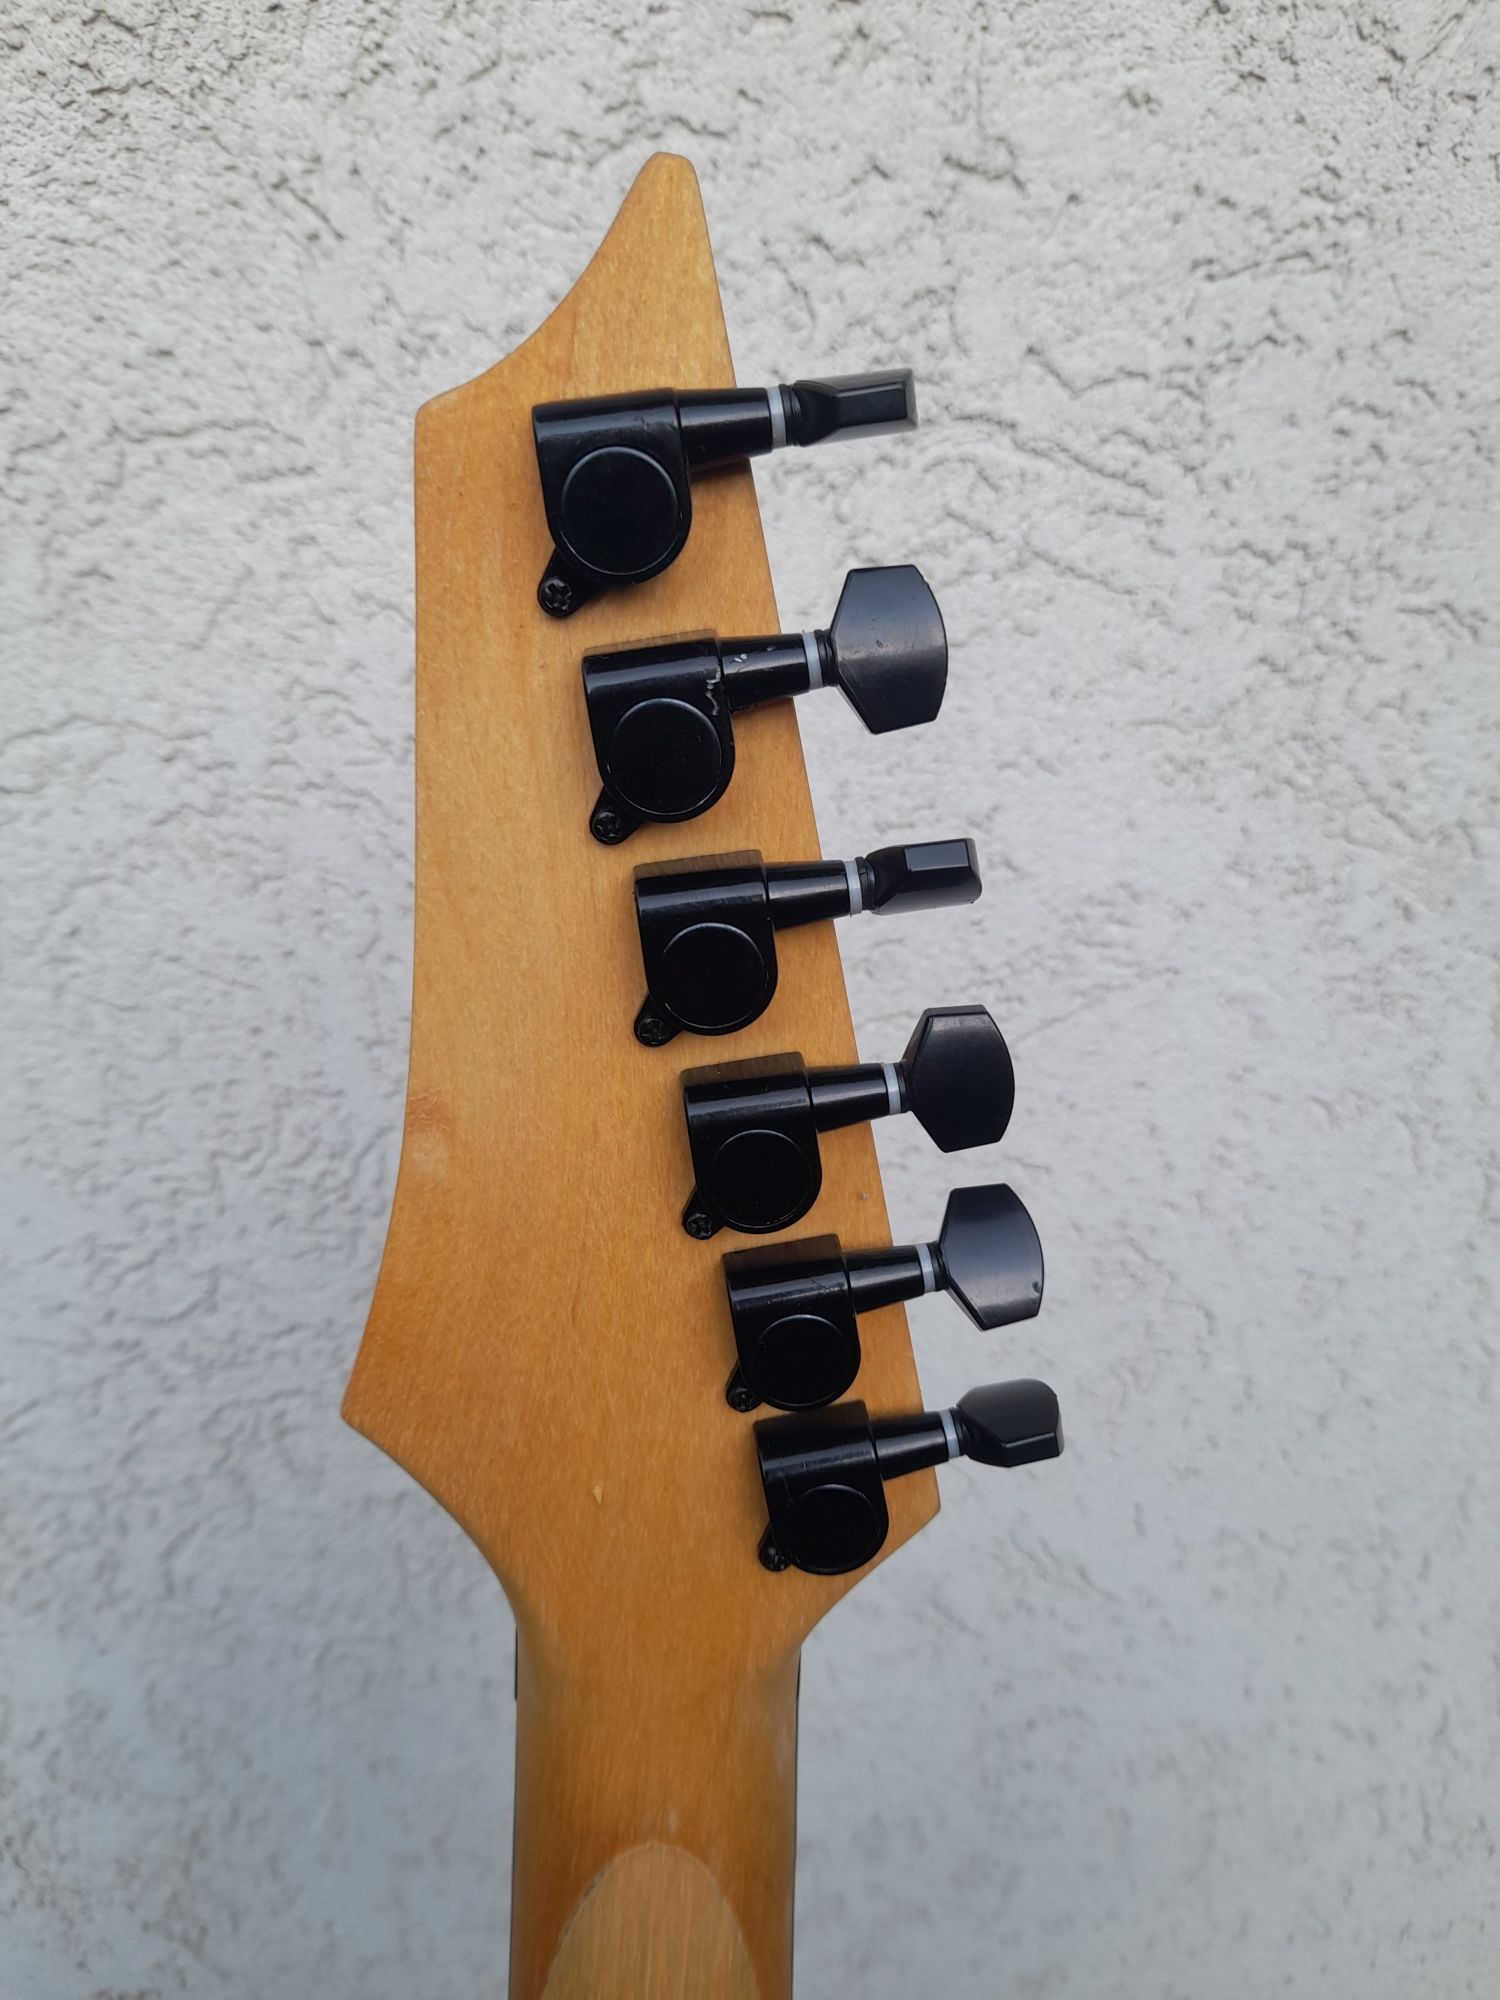 chitara electrica model Ibanez